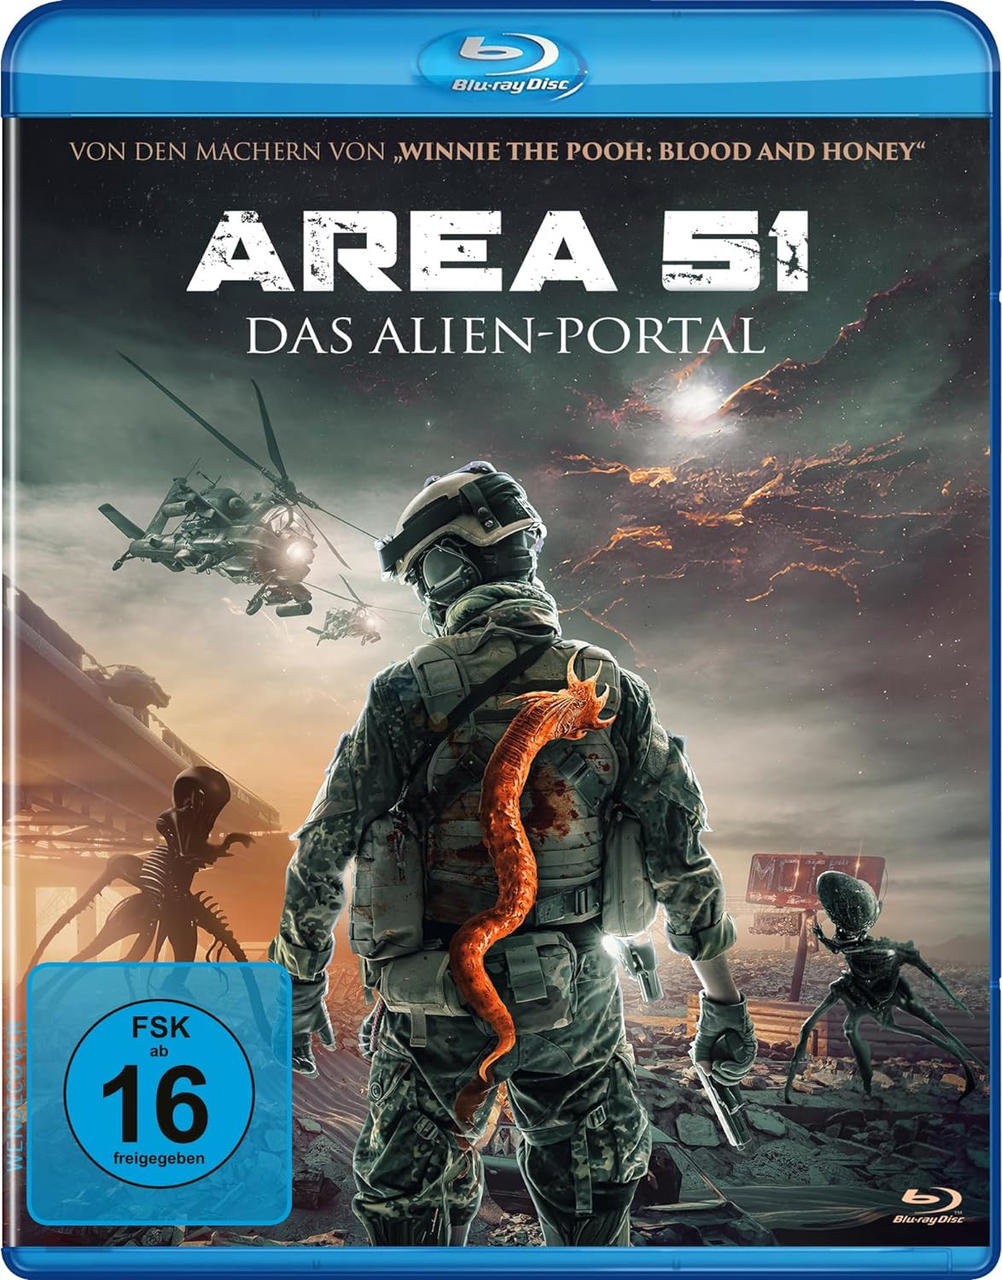 Area 51 Blu-ray Alien-Portal - Das